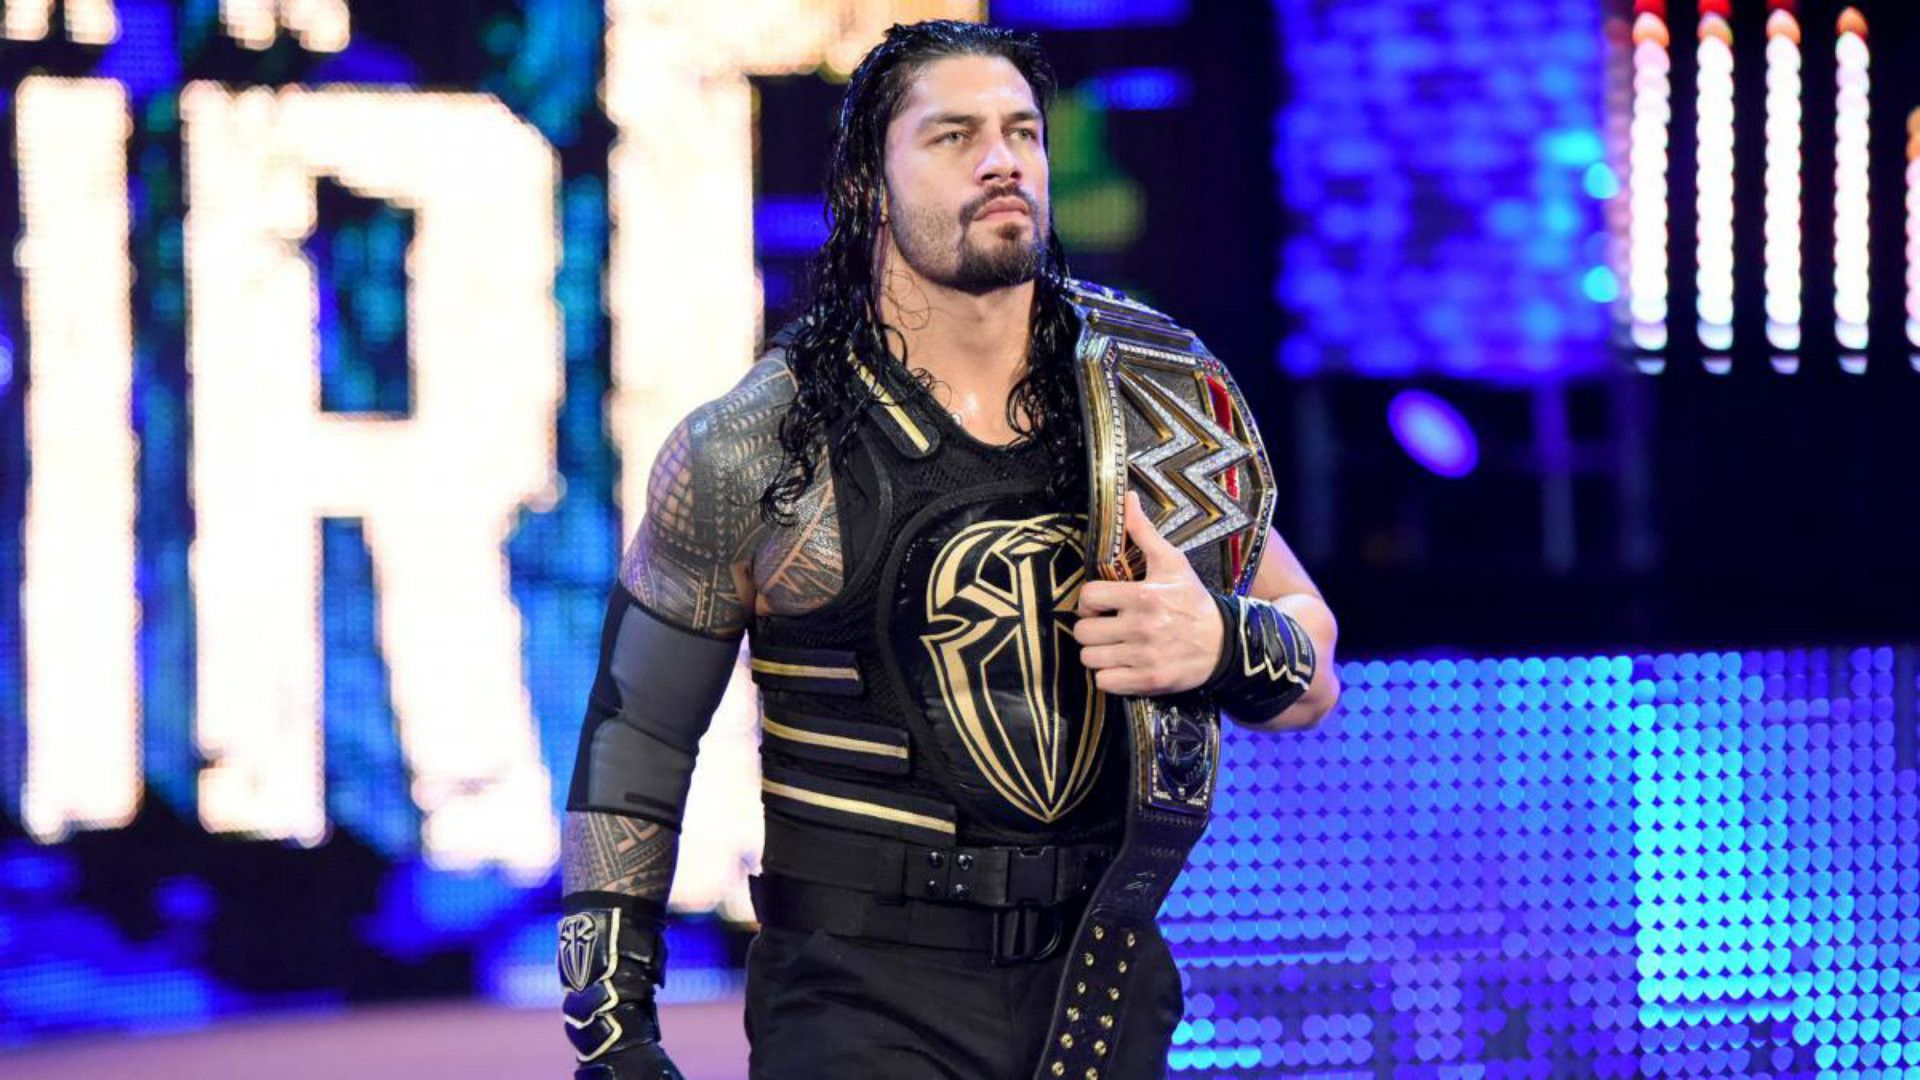 Roman Reigns WWE Wallpaper